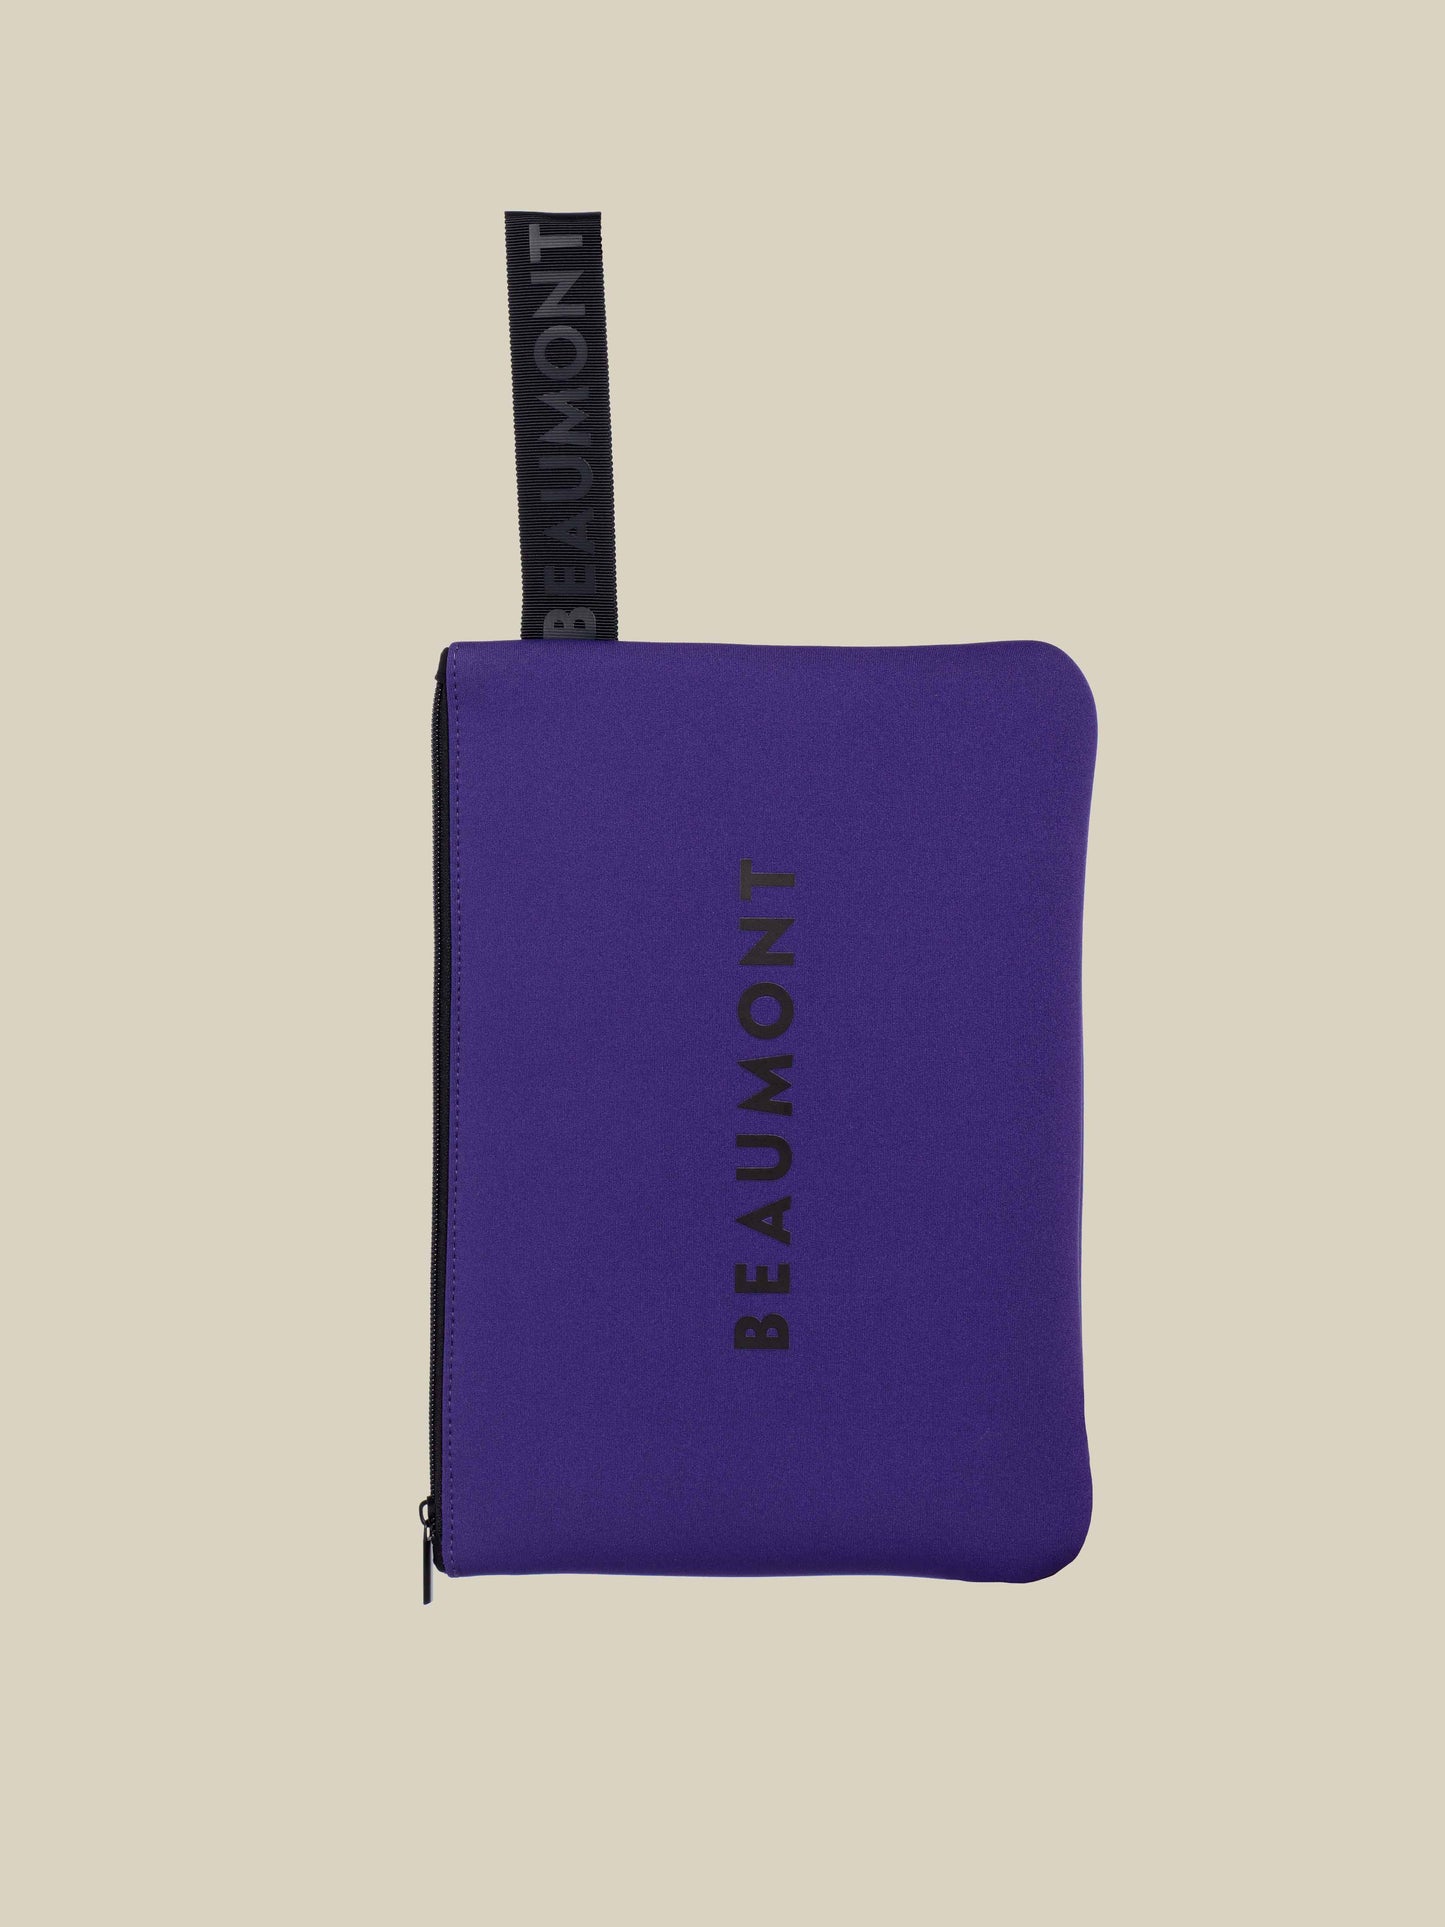 Zion zipper bag - Dark dahlia purple